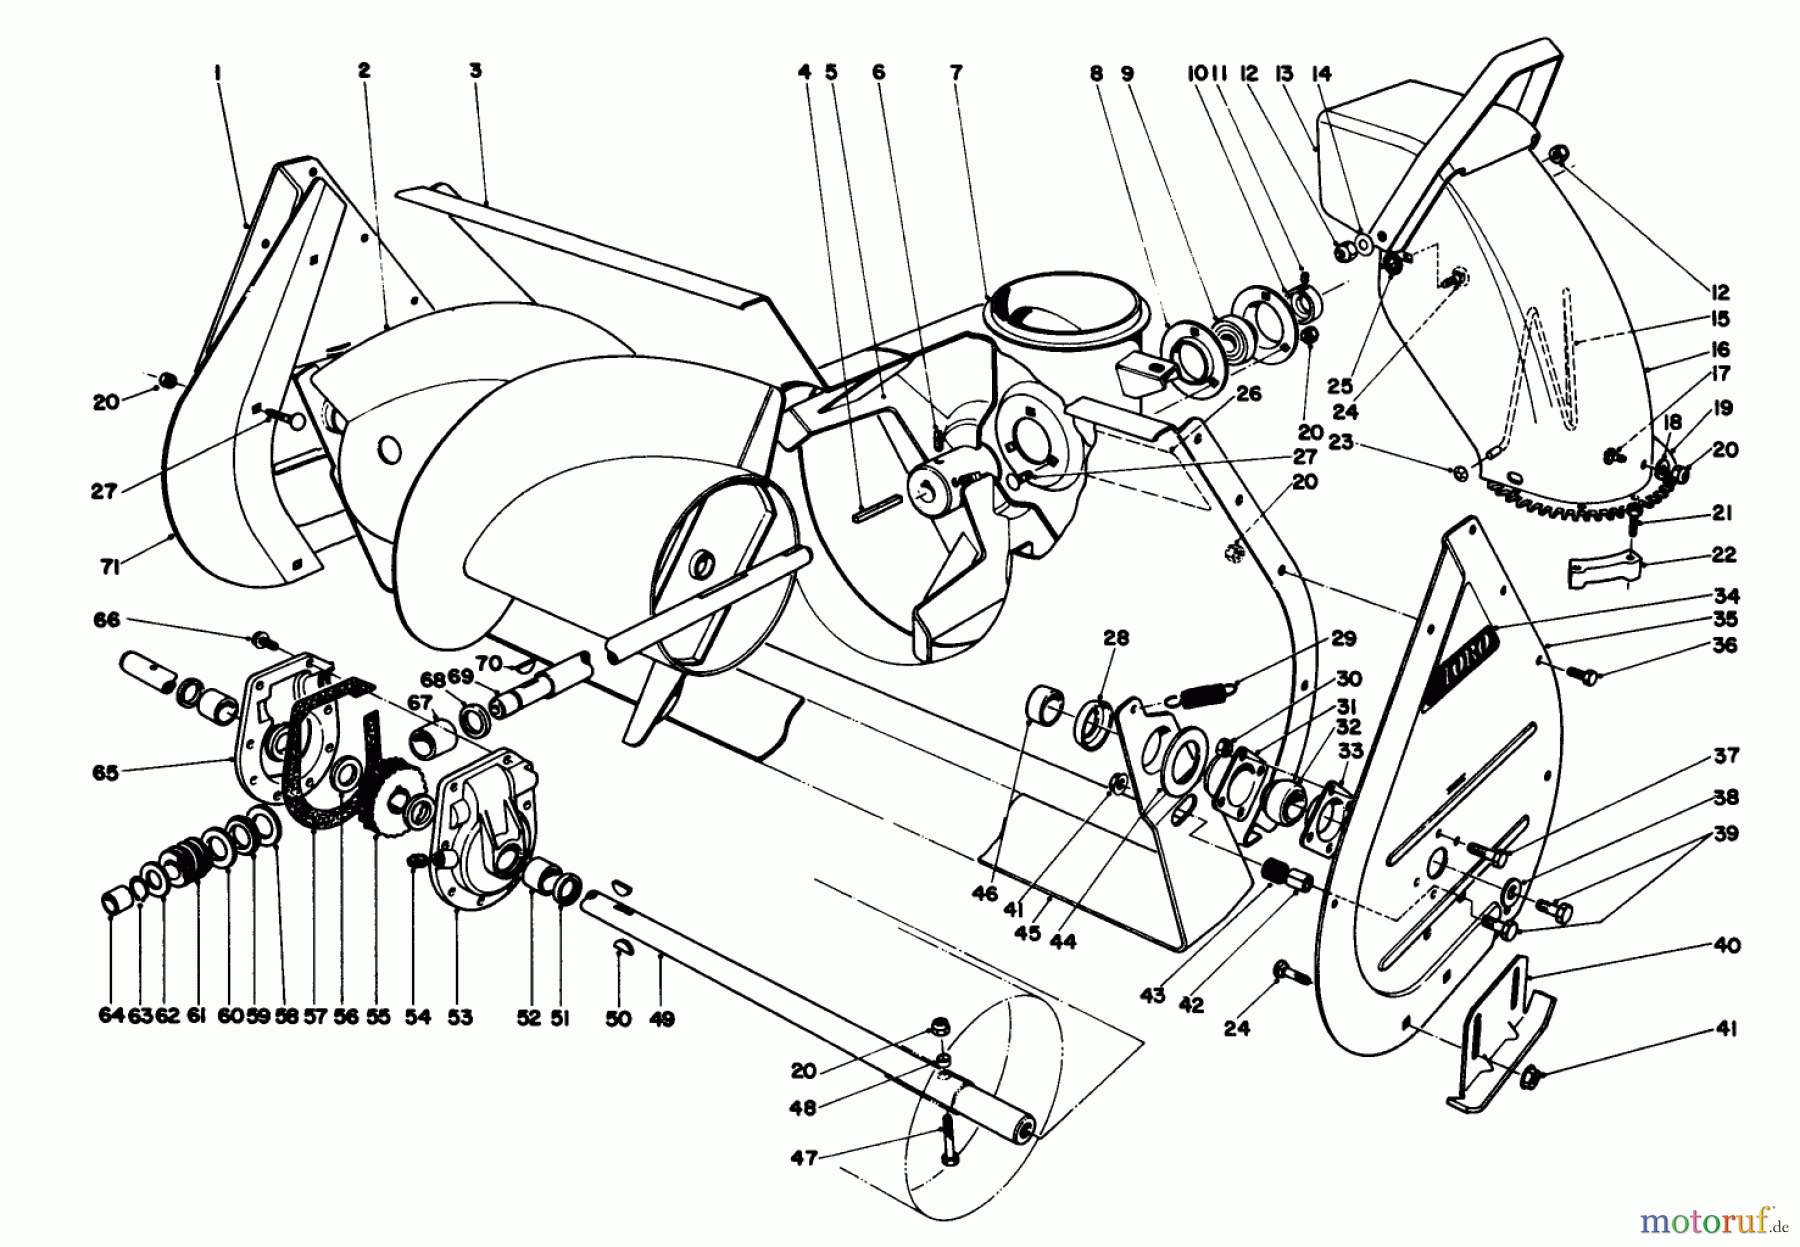  Toro Neu Mowers, Lawn & Garden Tractor Seite 1 57300 (8-32) - Toro 8-32 Front Engine Rider, 1984 (4000001-4999999) AUGER ASSEMBLY 36